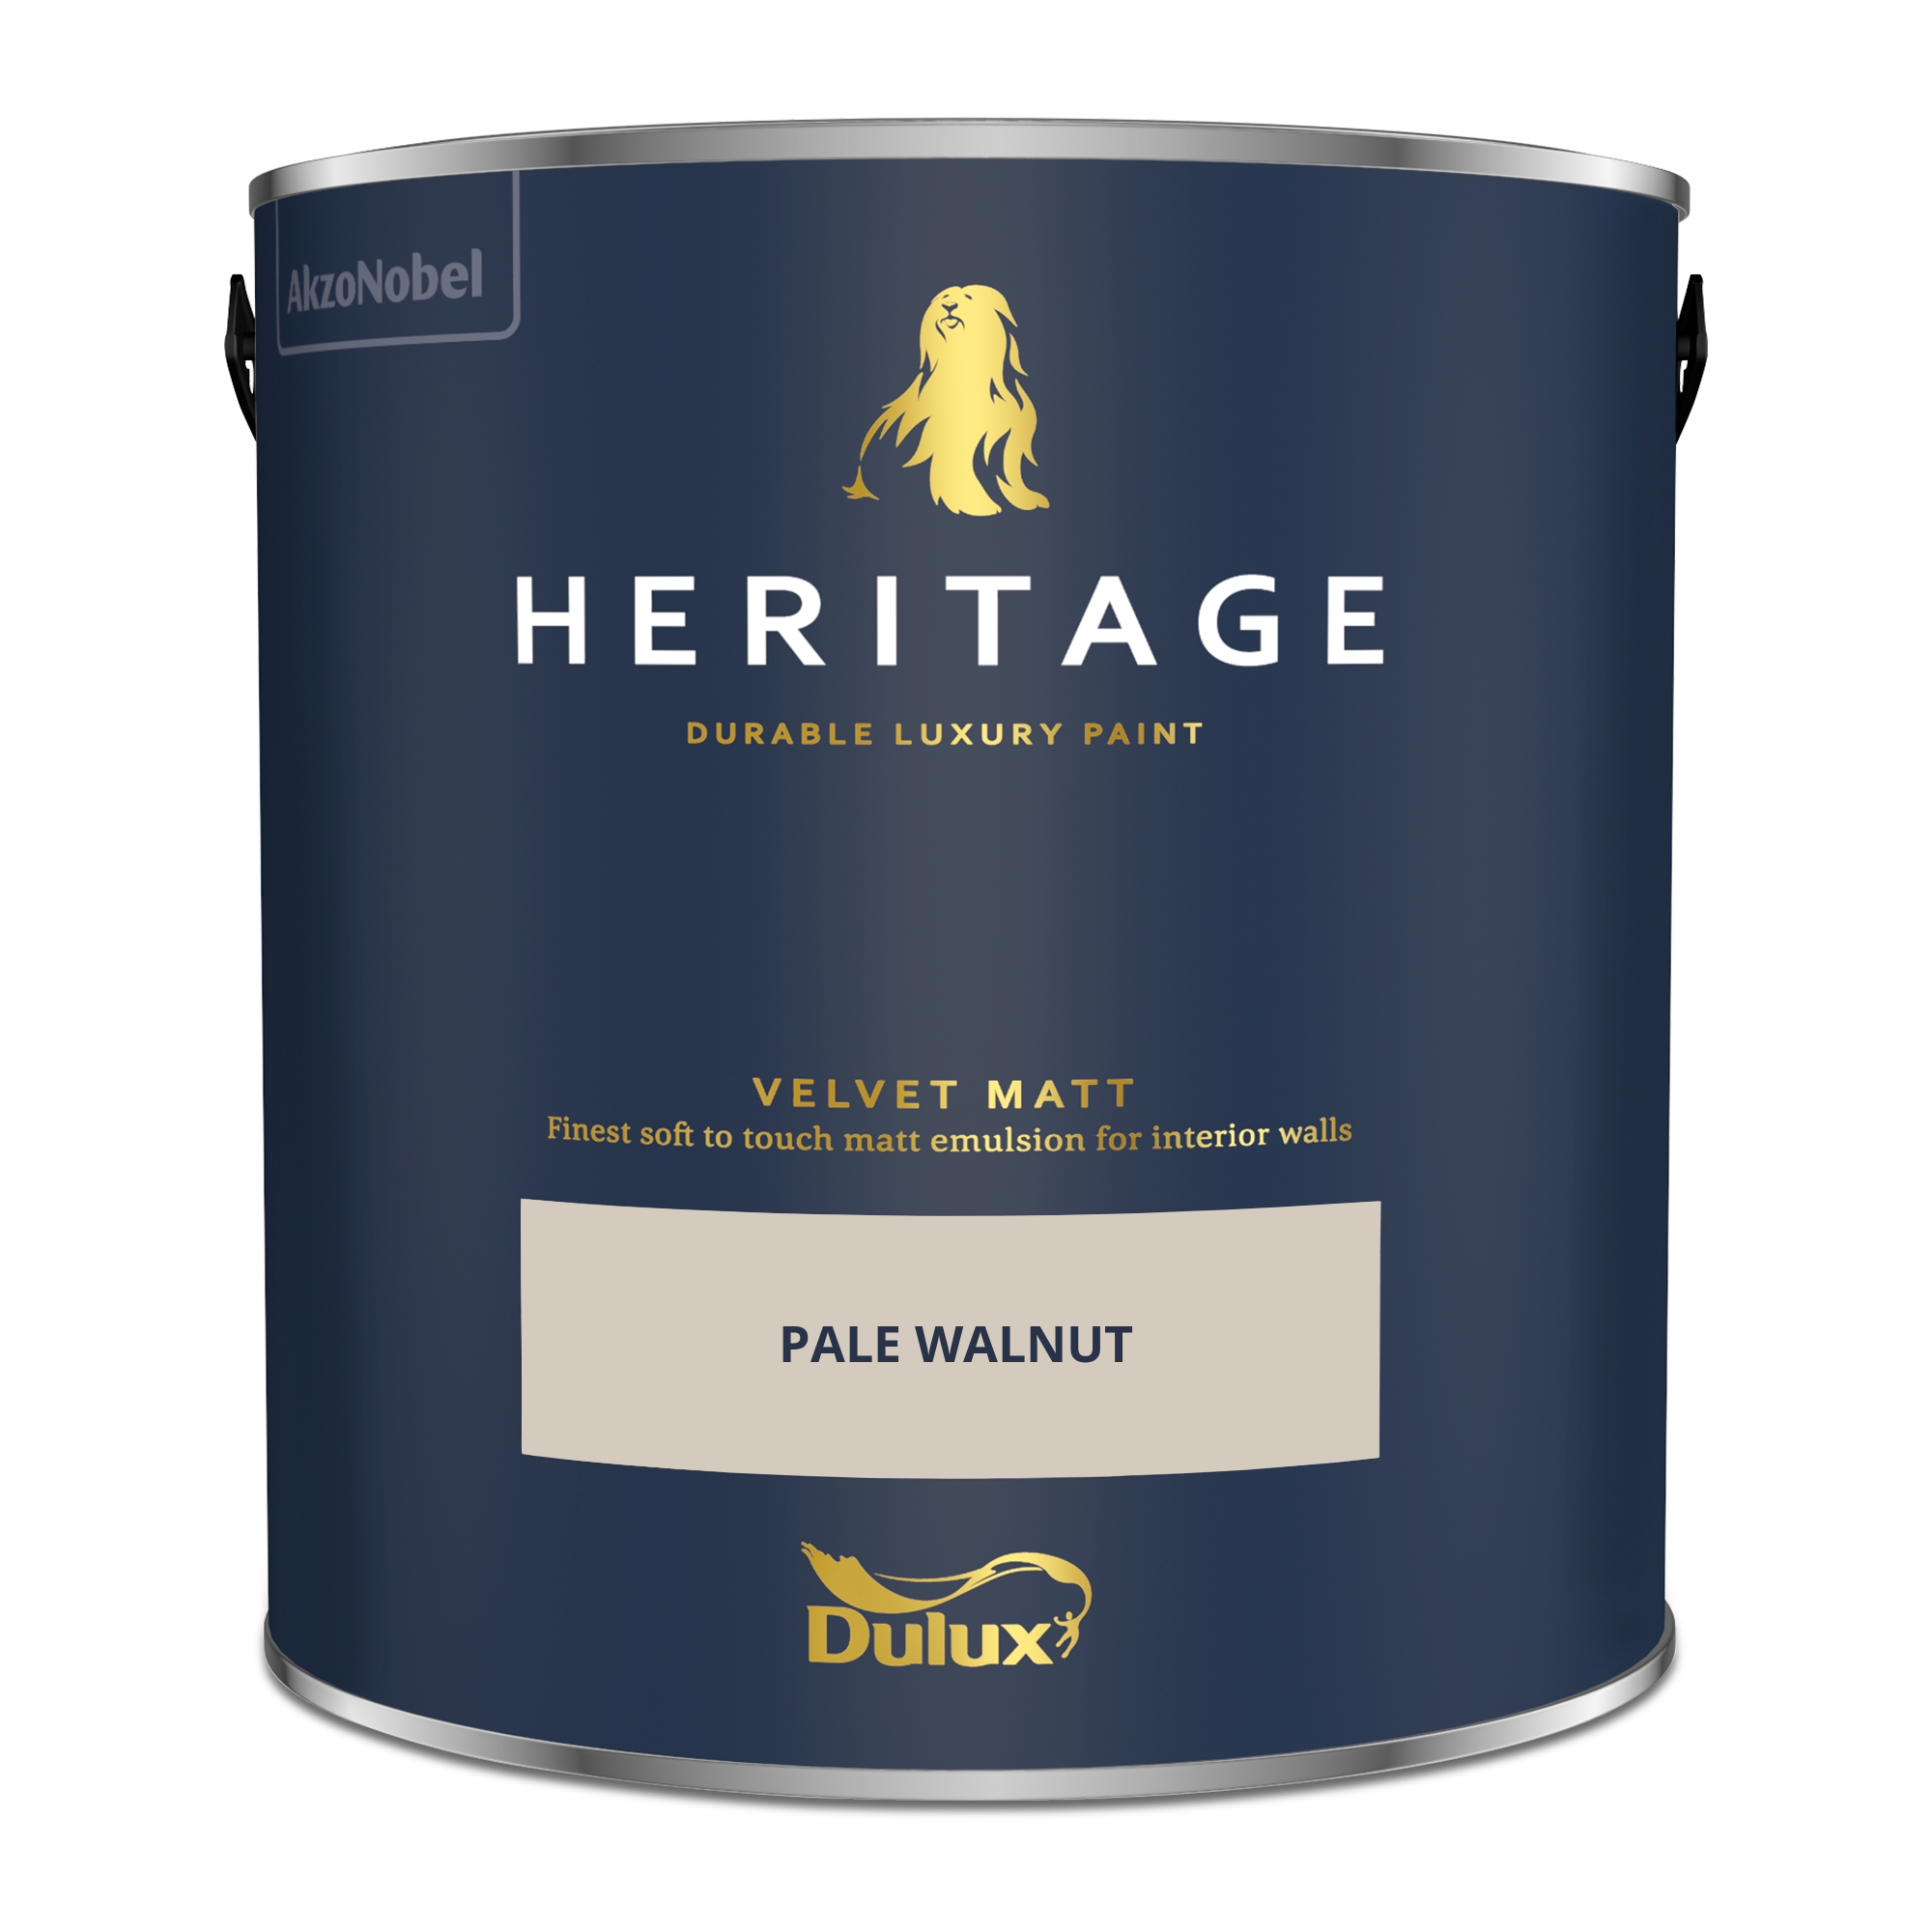 Dulux Heritage Velvet Matt Pale Walnut 2.5L